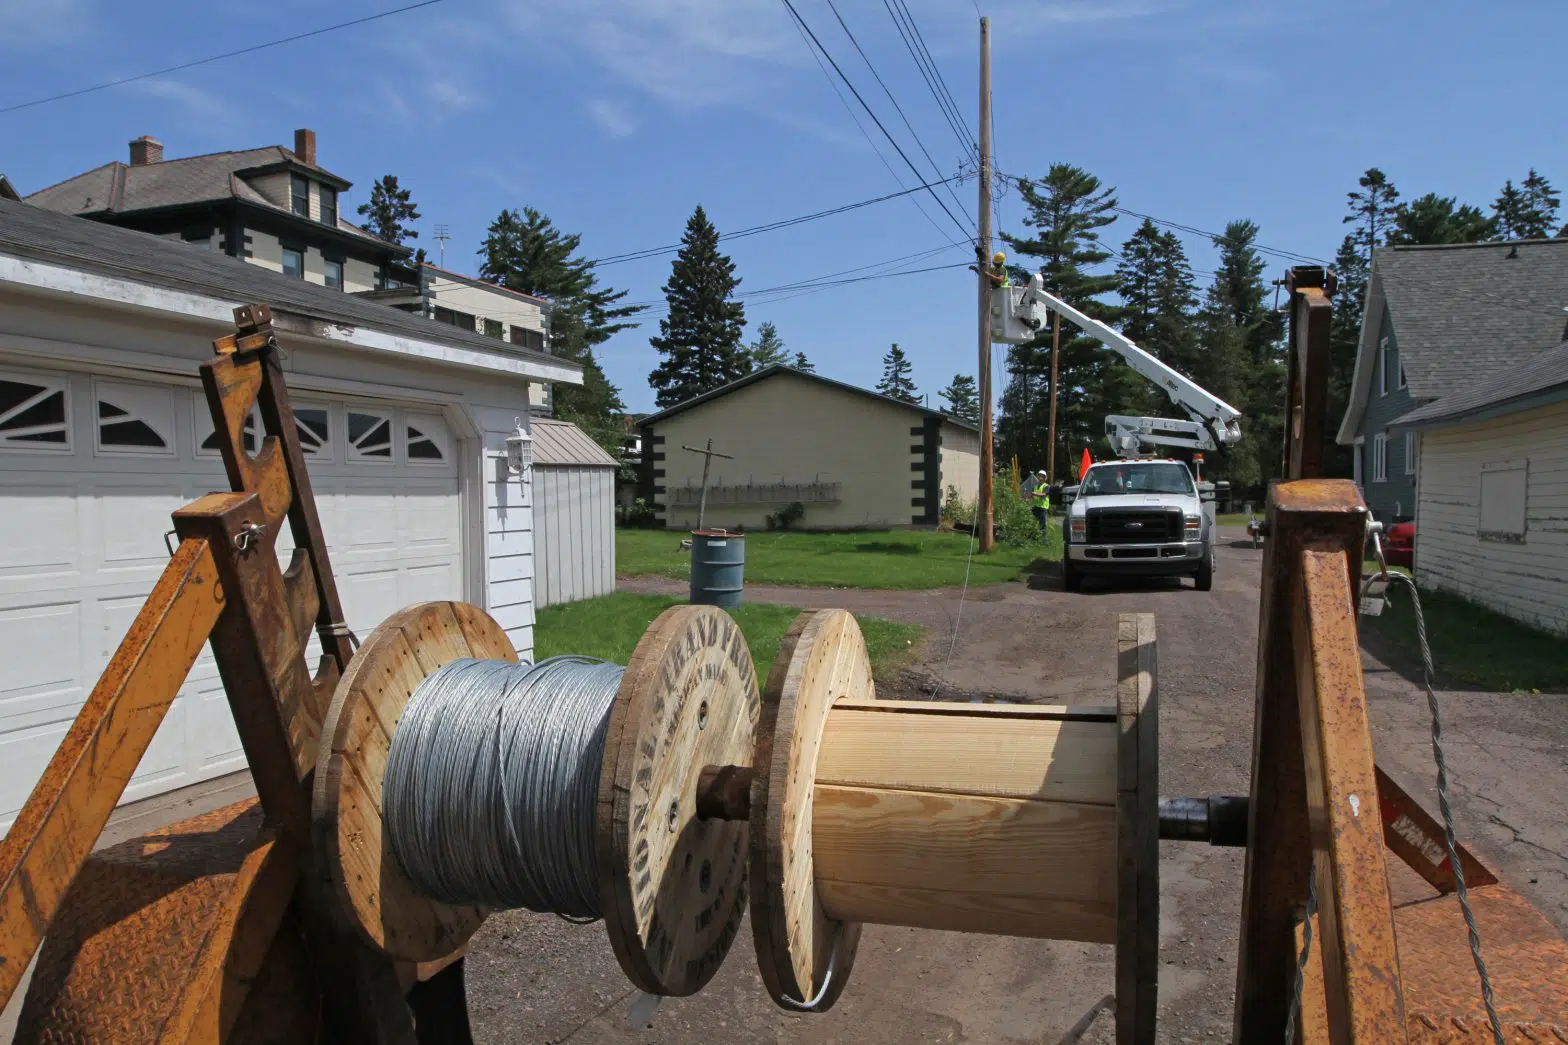 Rural Broadband Companies Face Fines